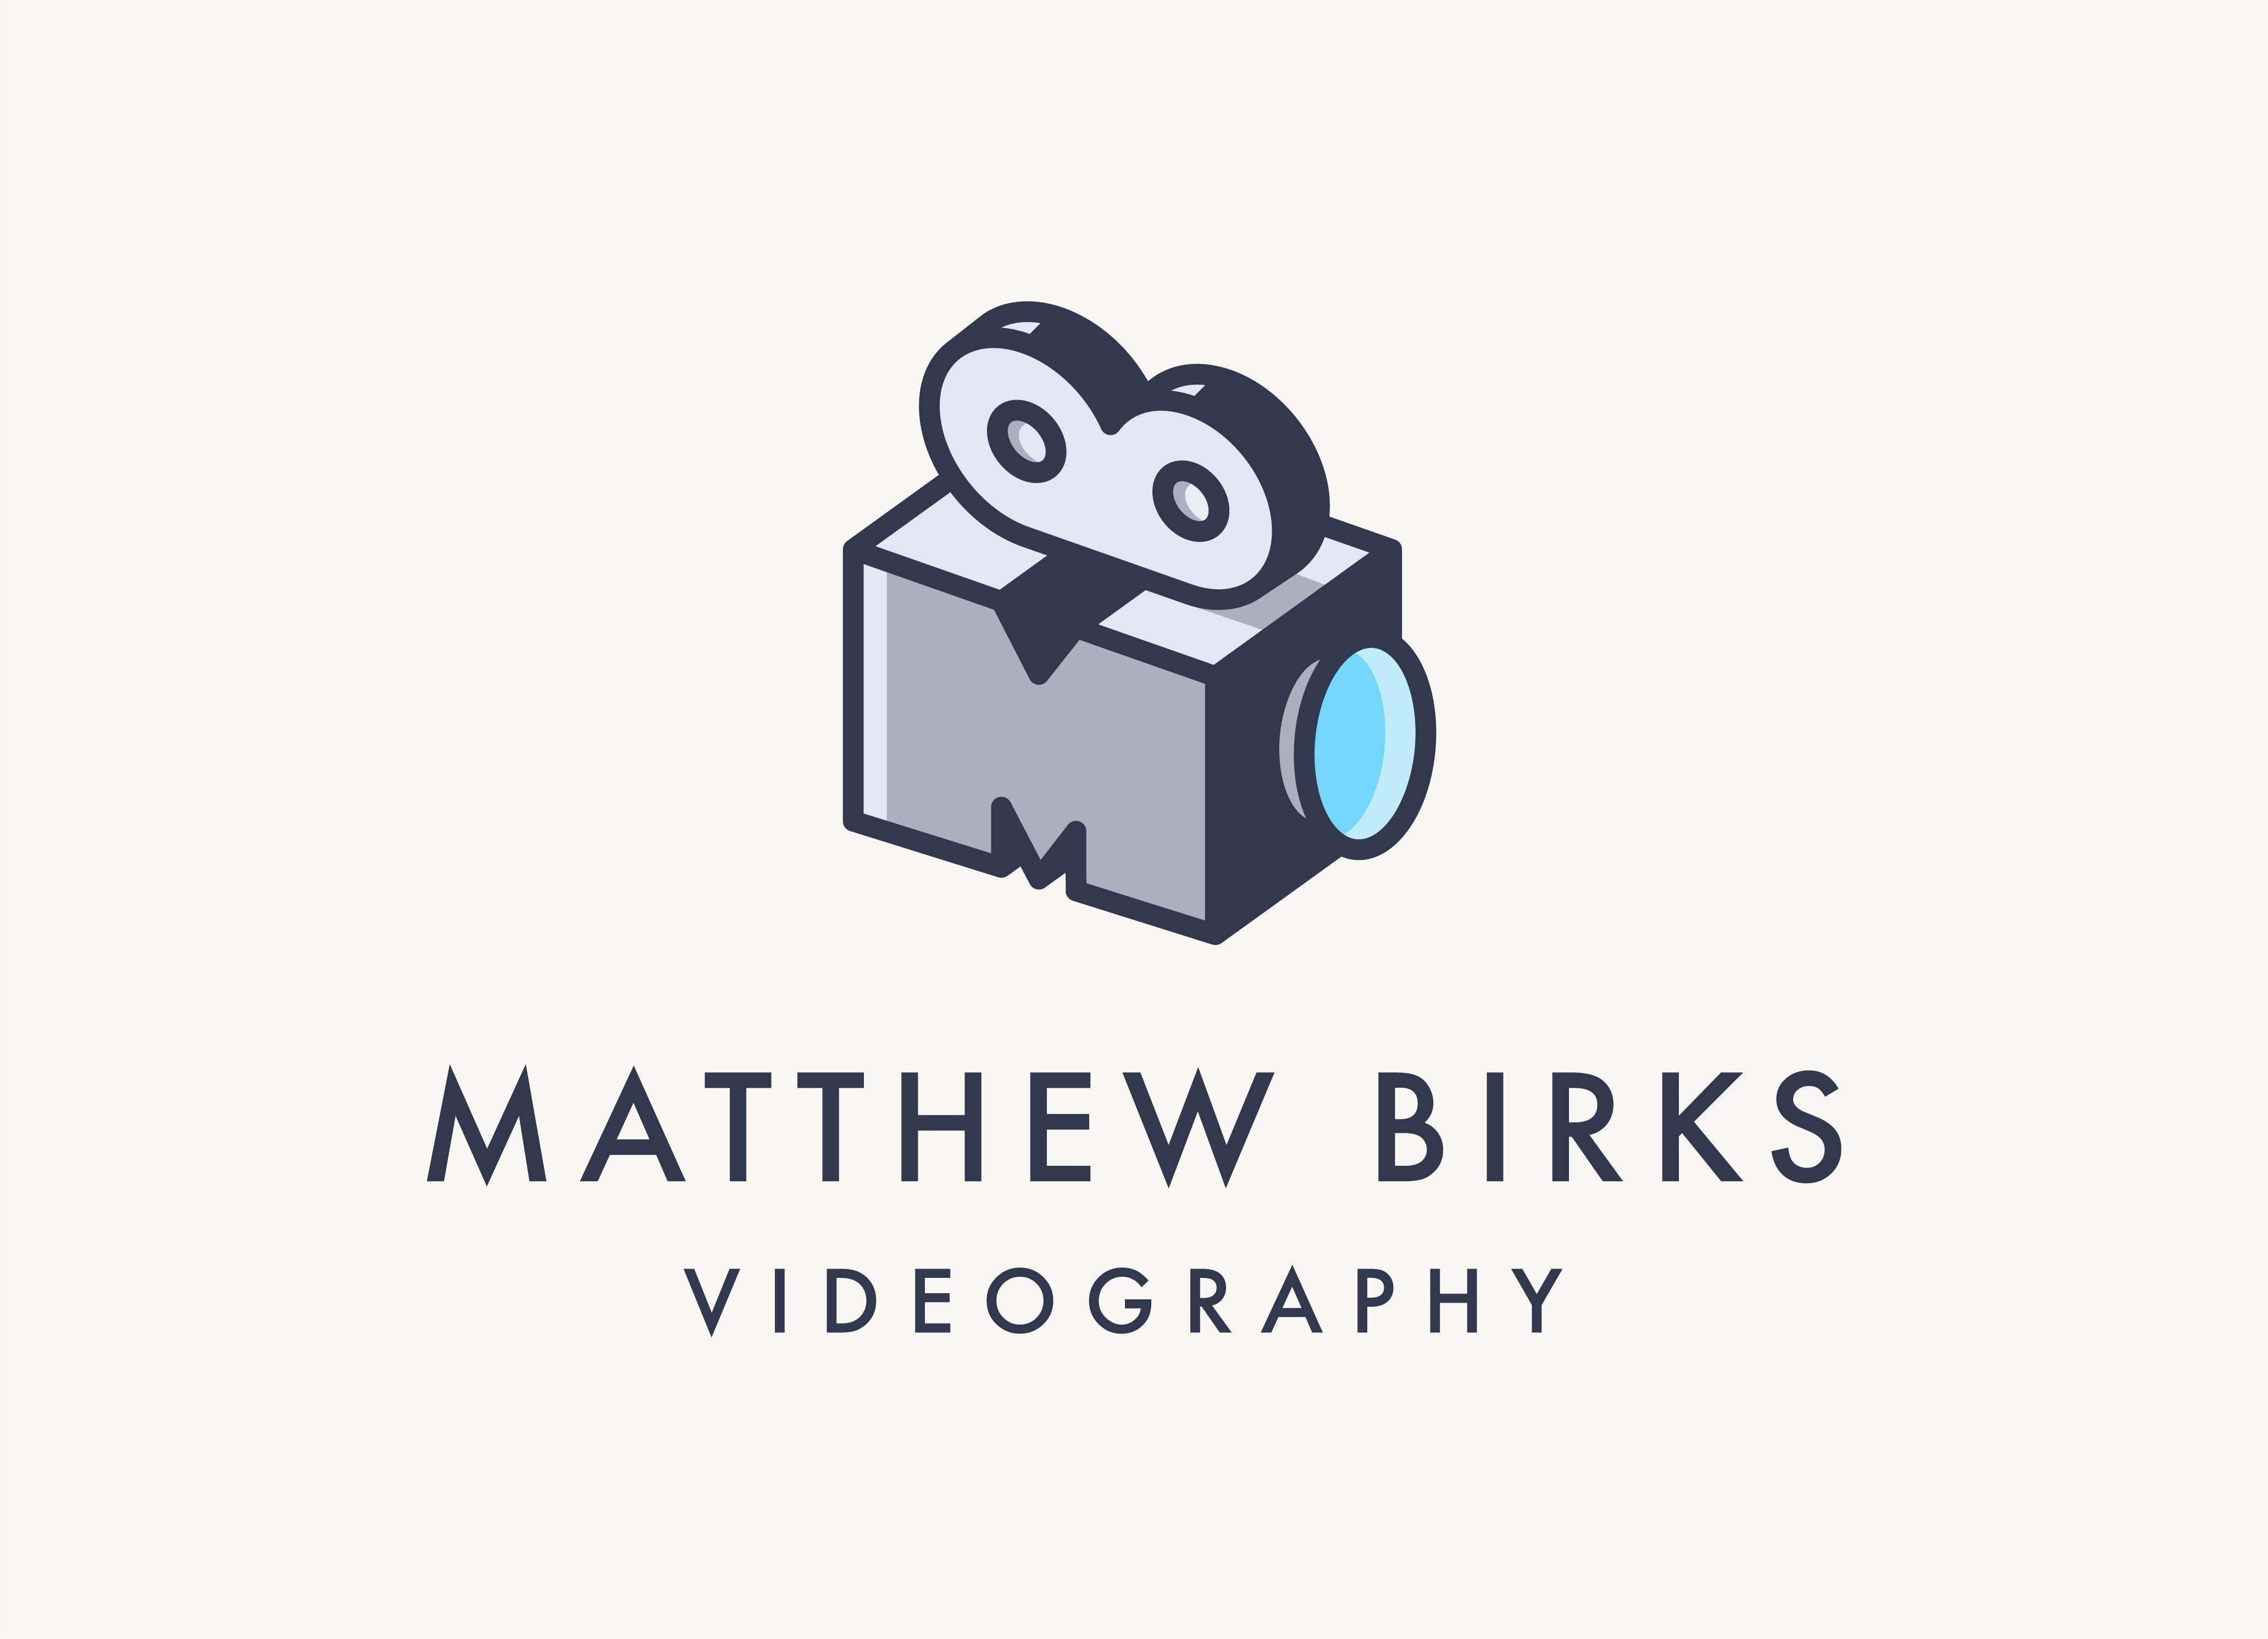 Videography Logo - Logo for a videographer! Can you spot the hidden MB?